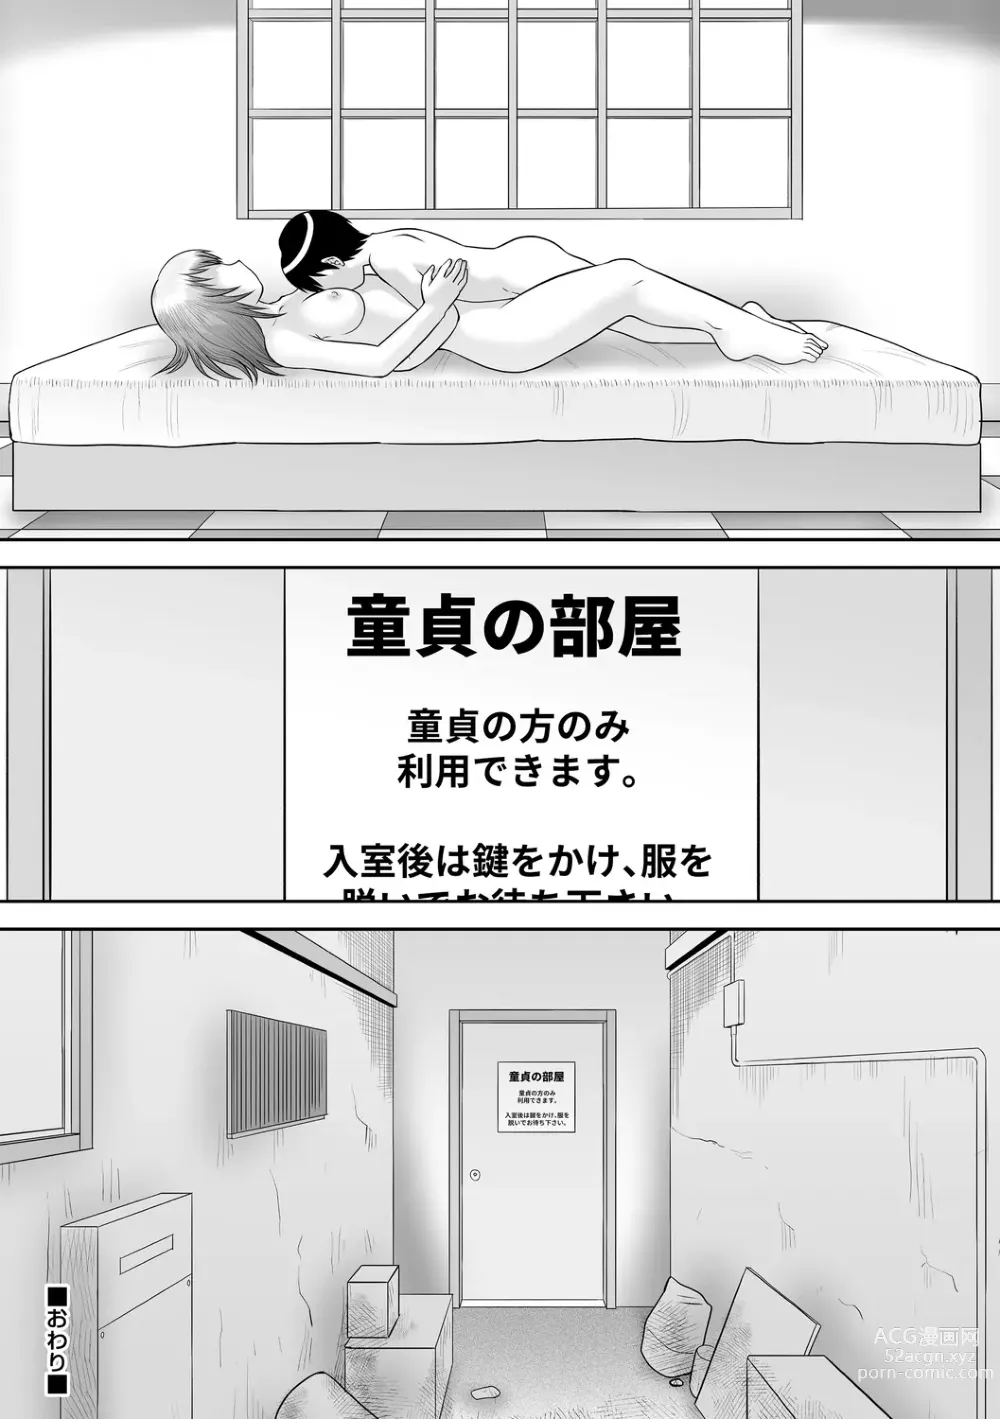 Page 185 of manga OneShota Support SEX